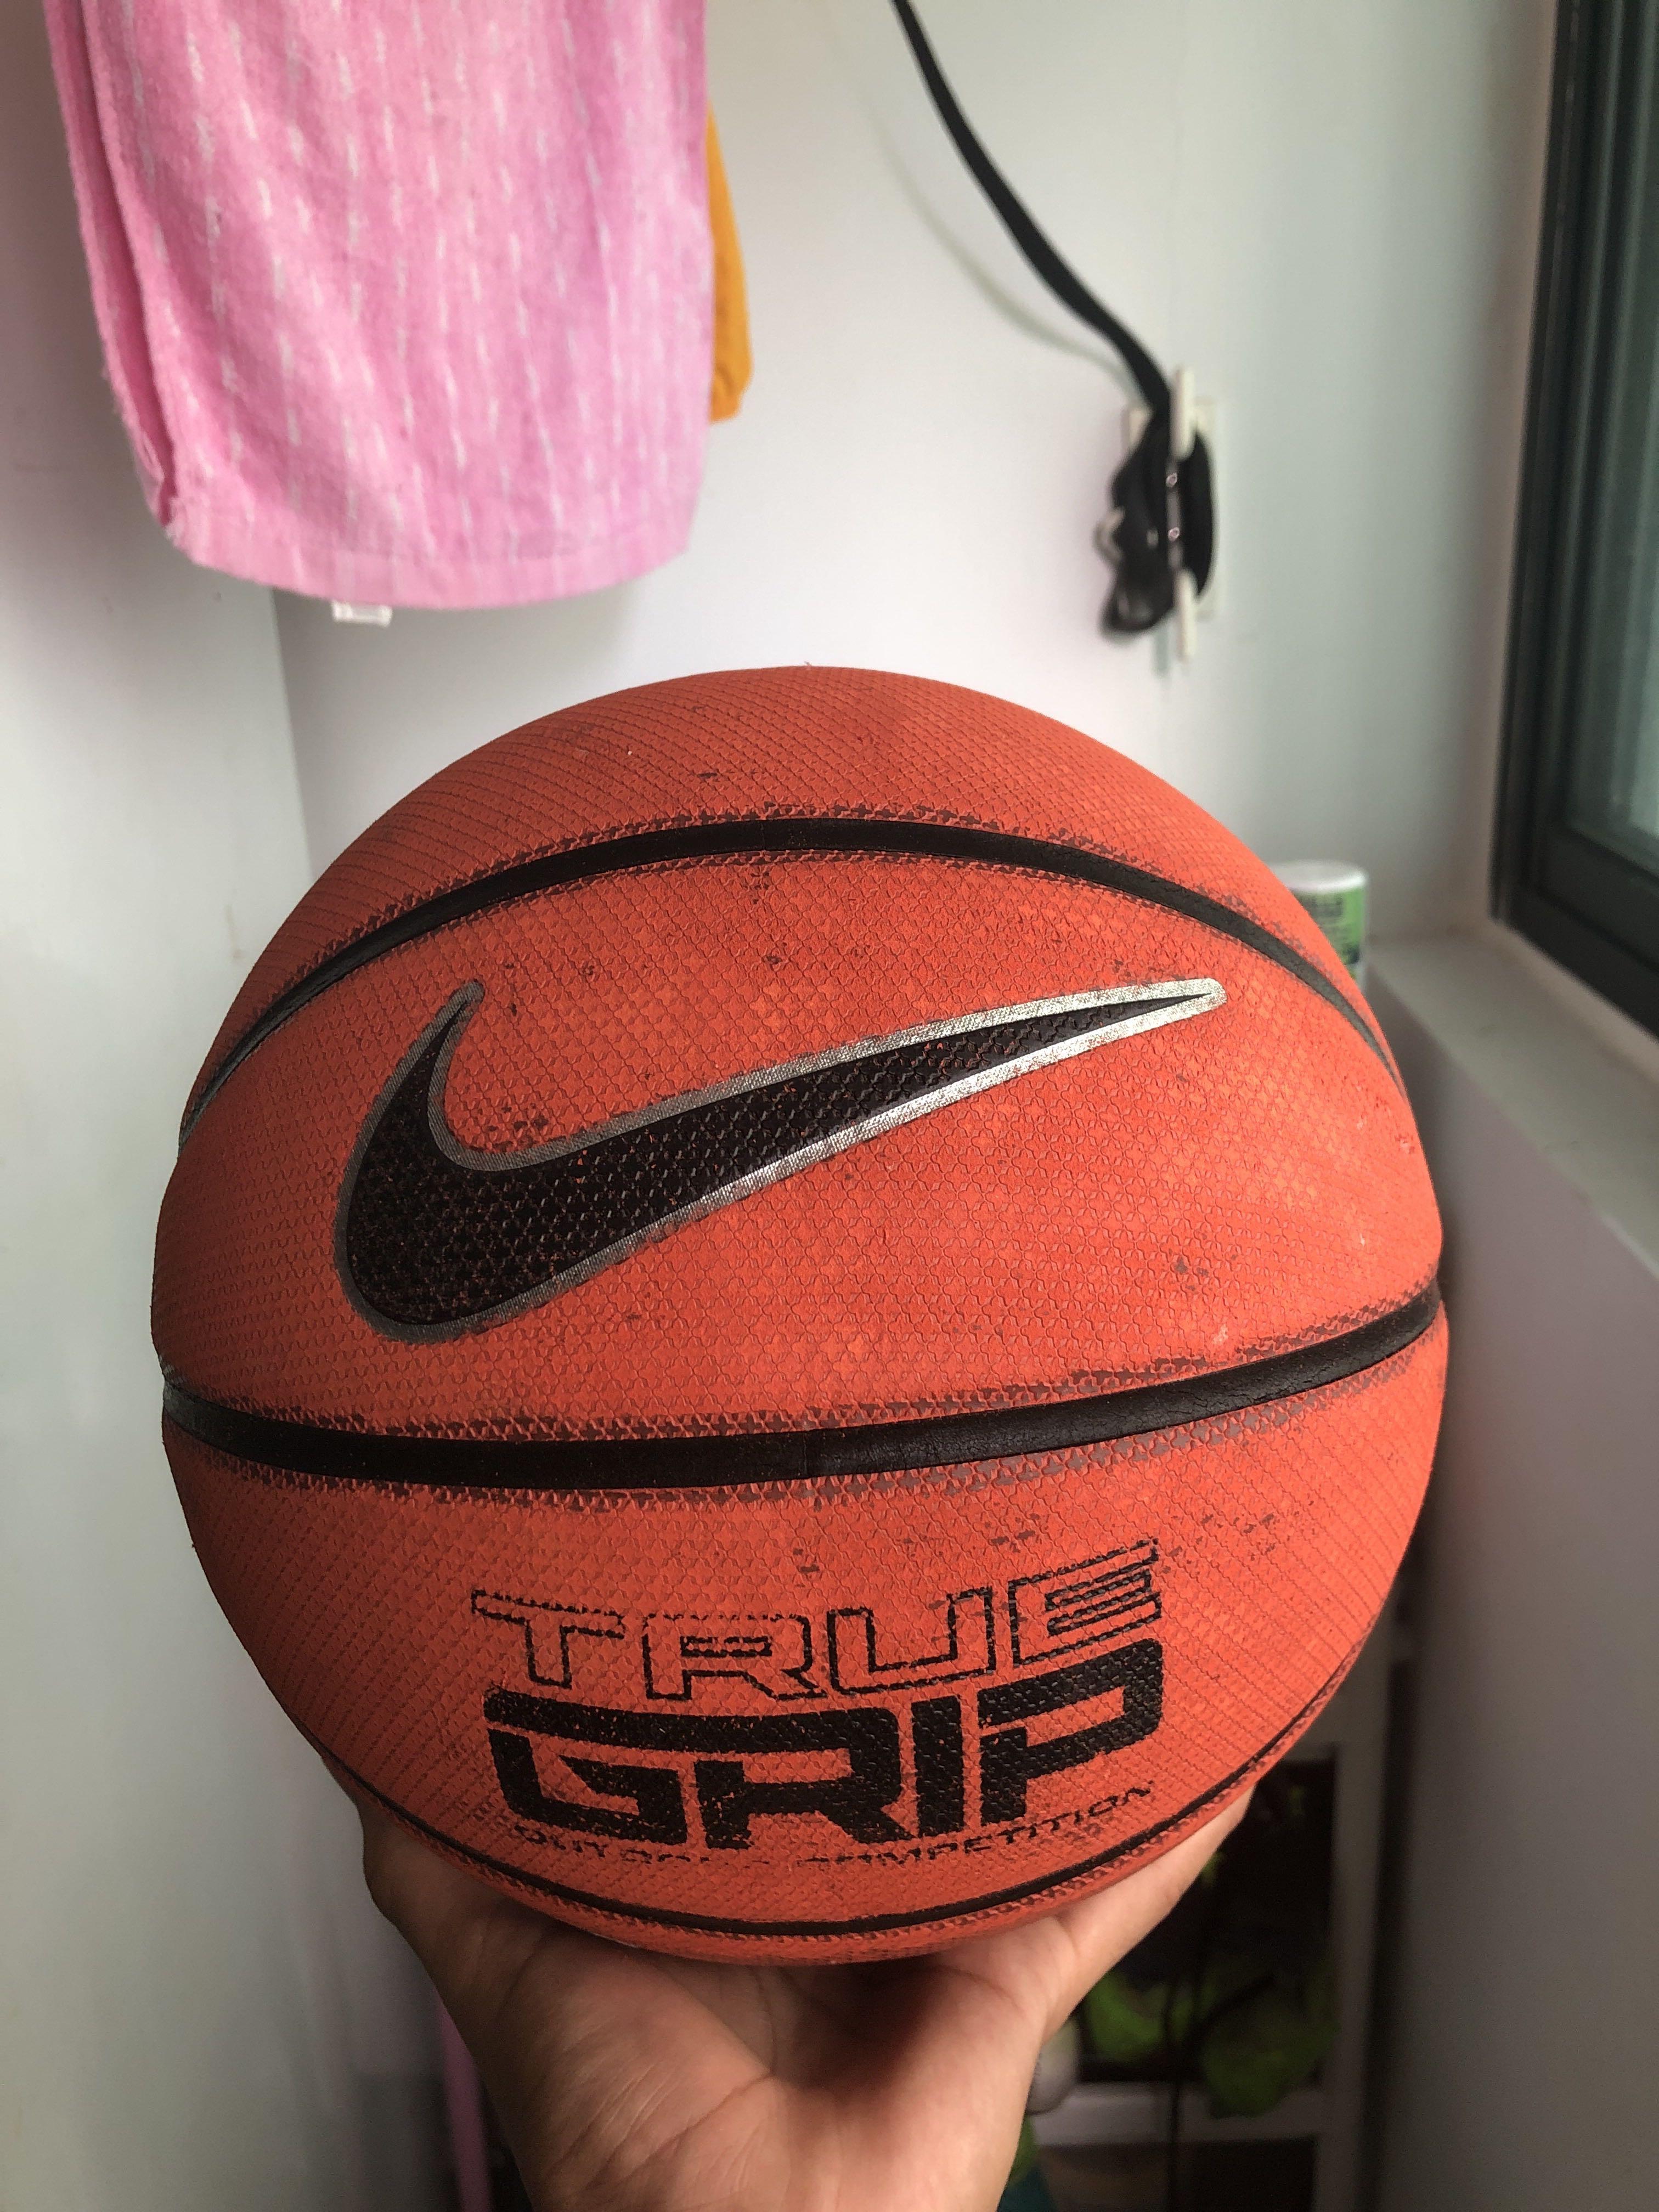 nike basketball size 5